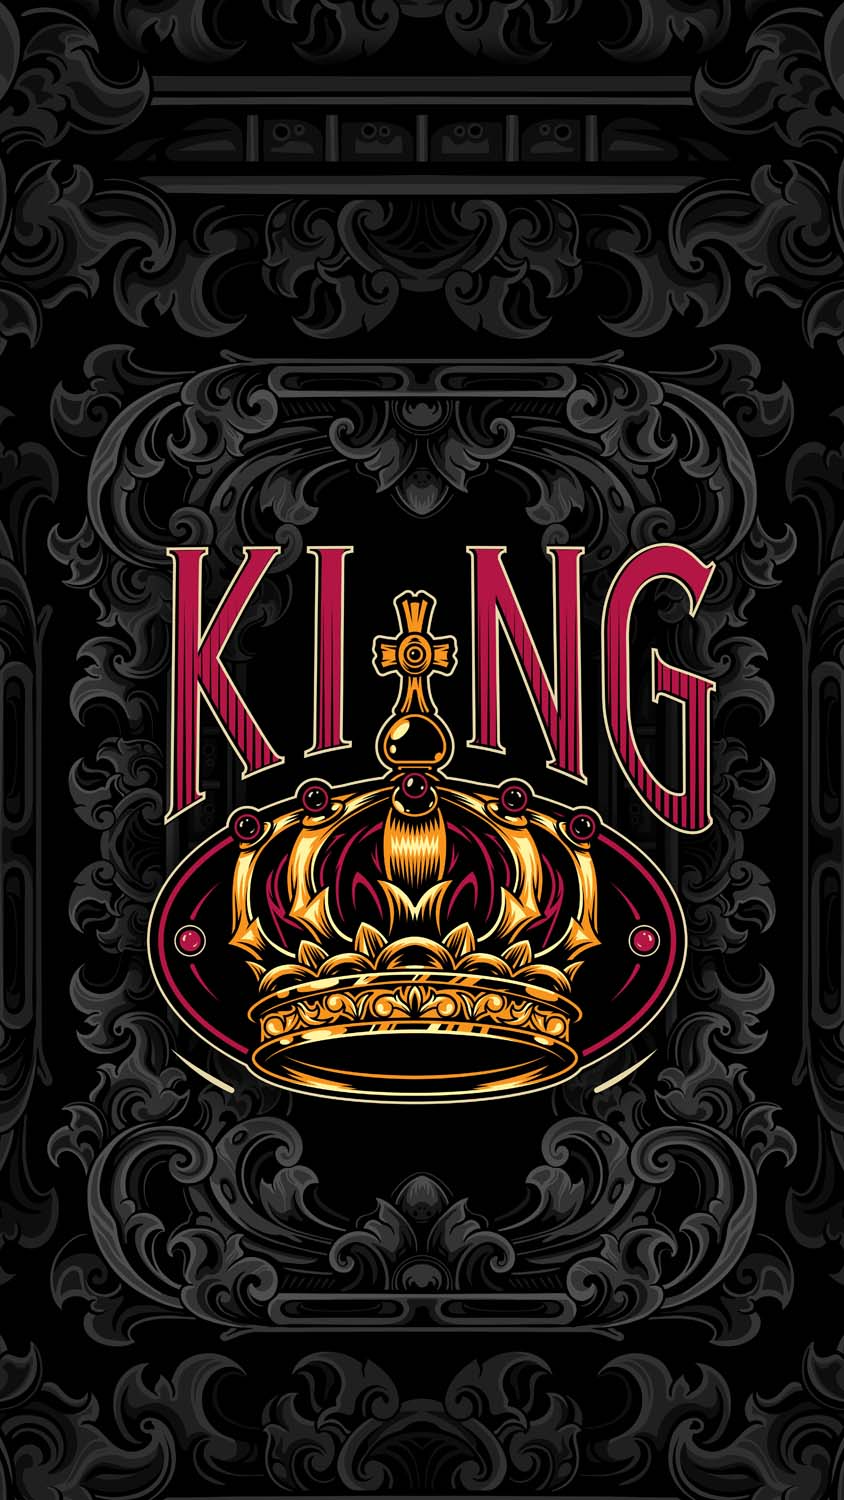 King Crown IPhone Wallpaper HD  IPhone Wallpapers